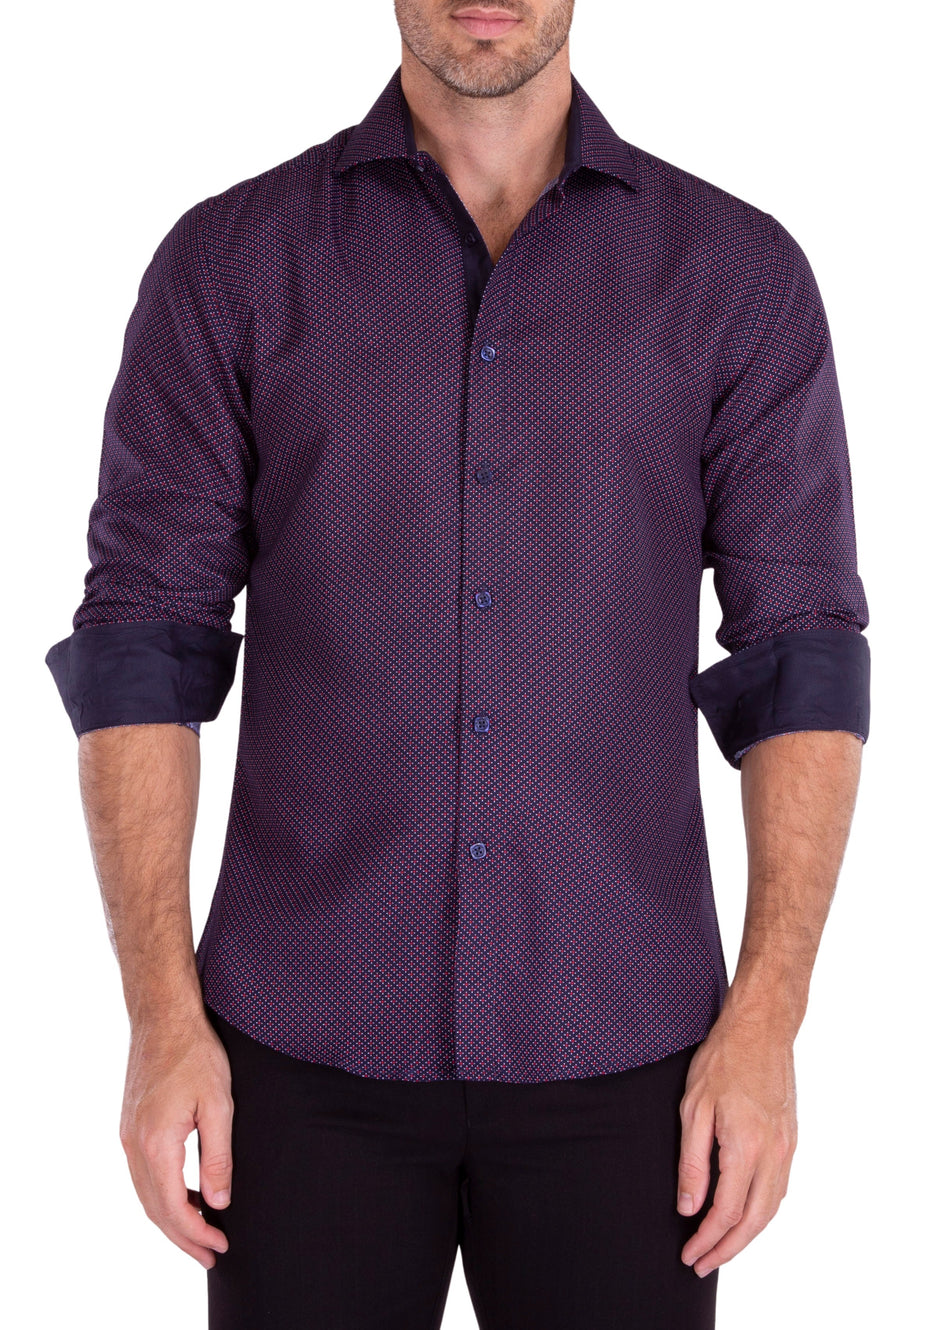 212396 - Navy Long Sleeve Shirt